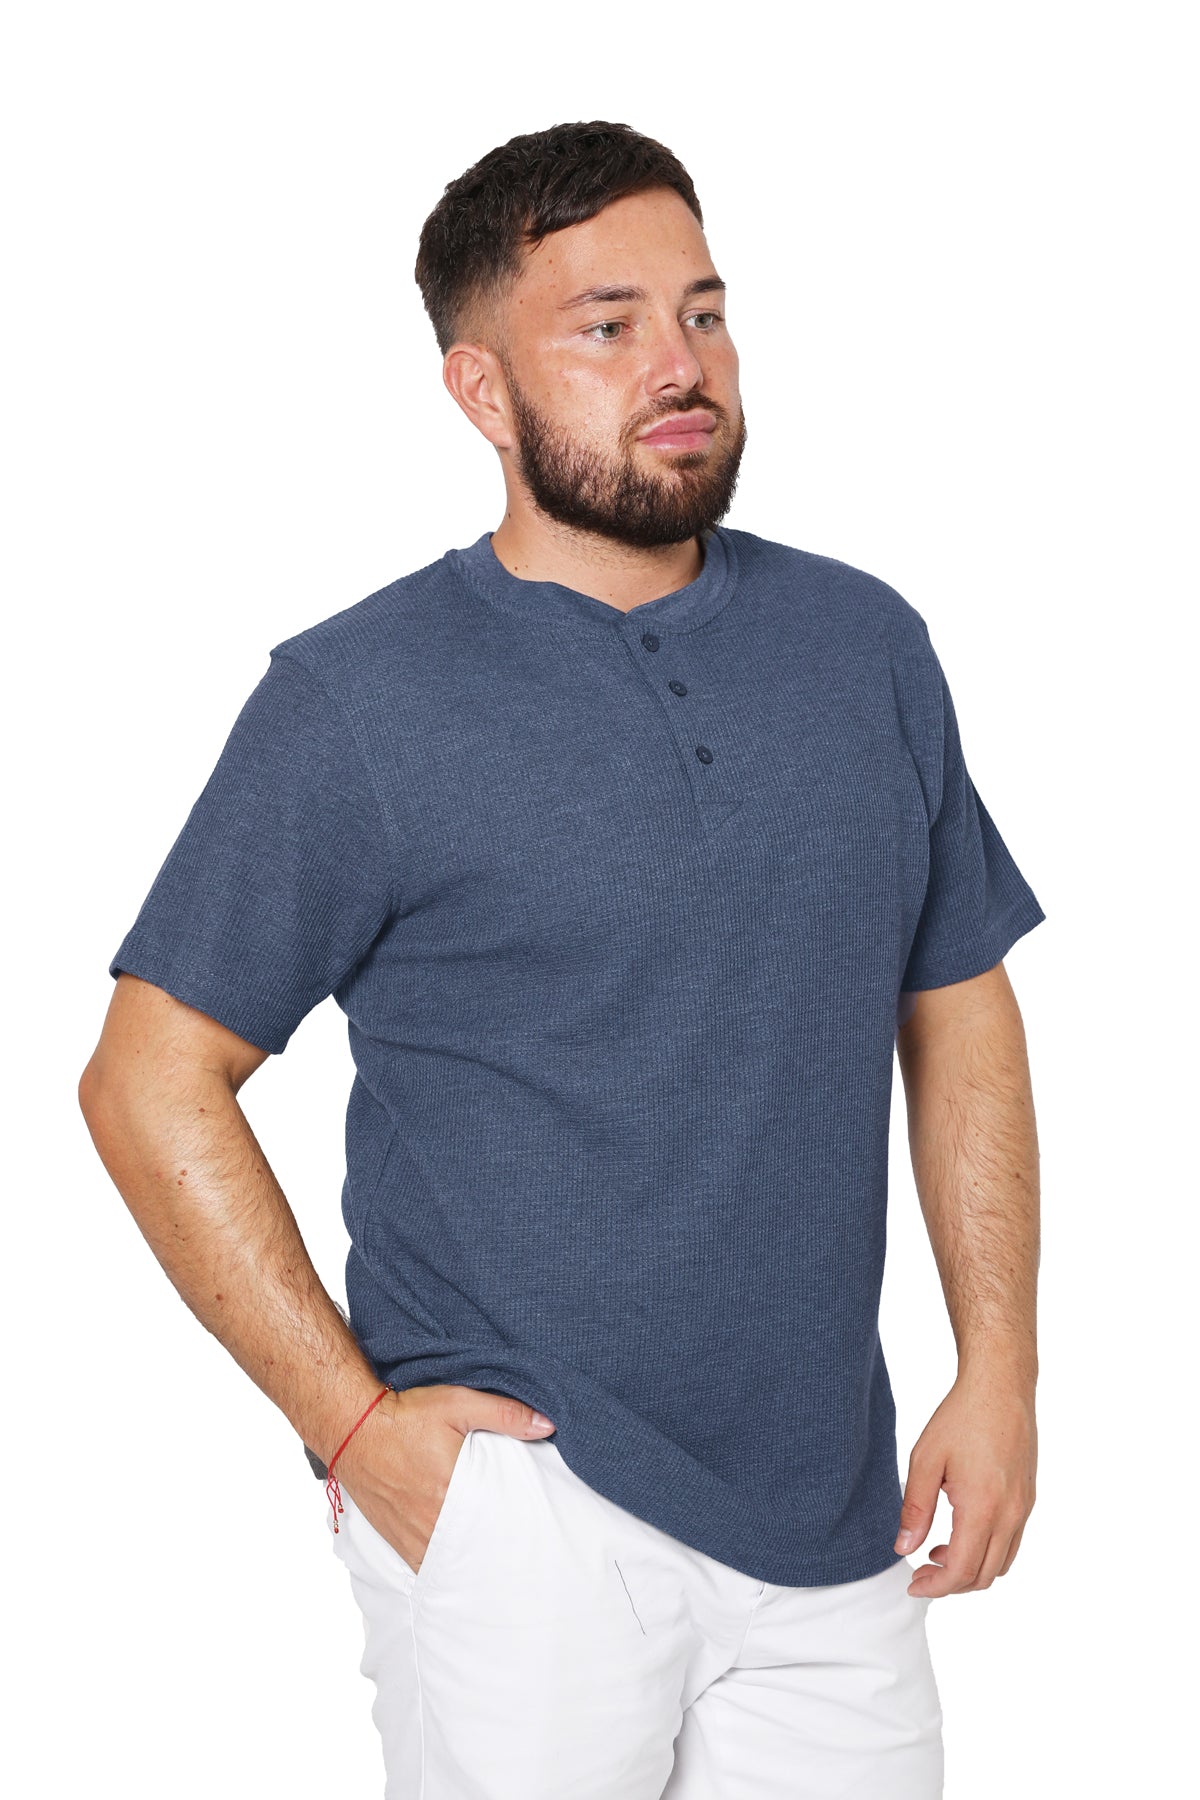 Short Sleeve Waffle Knit Henley T-Shirt - Denim